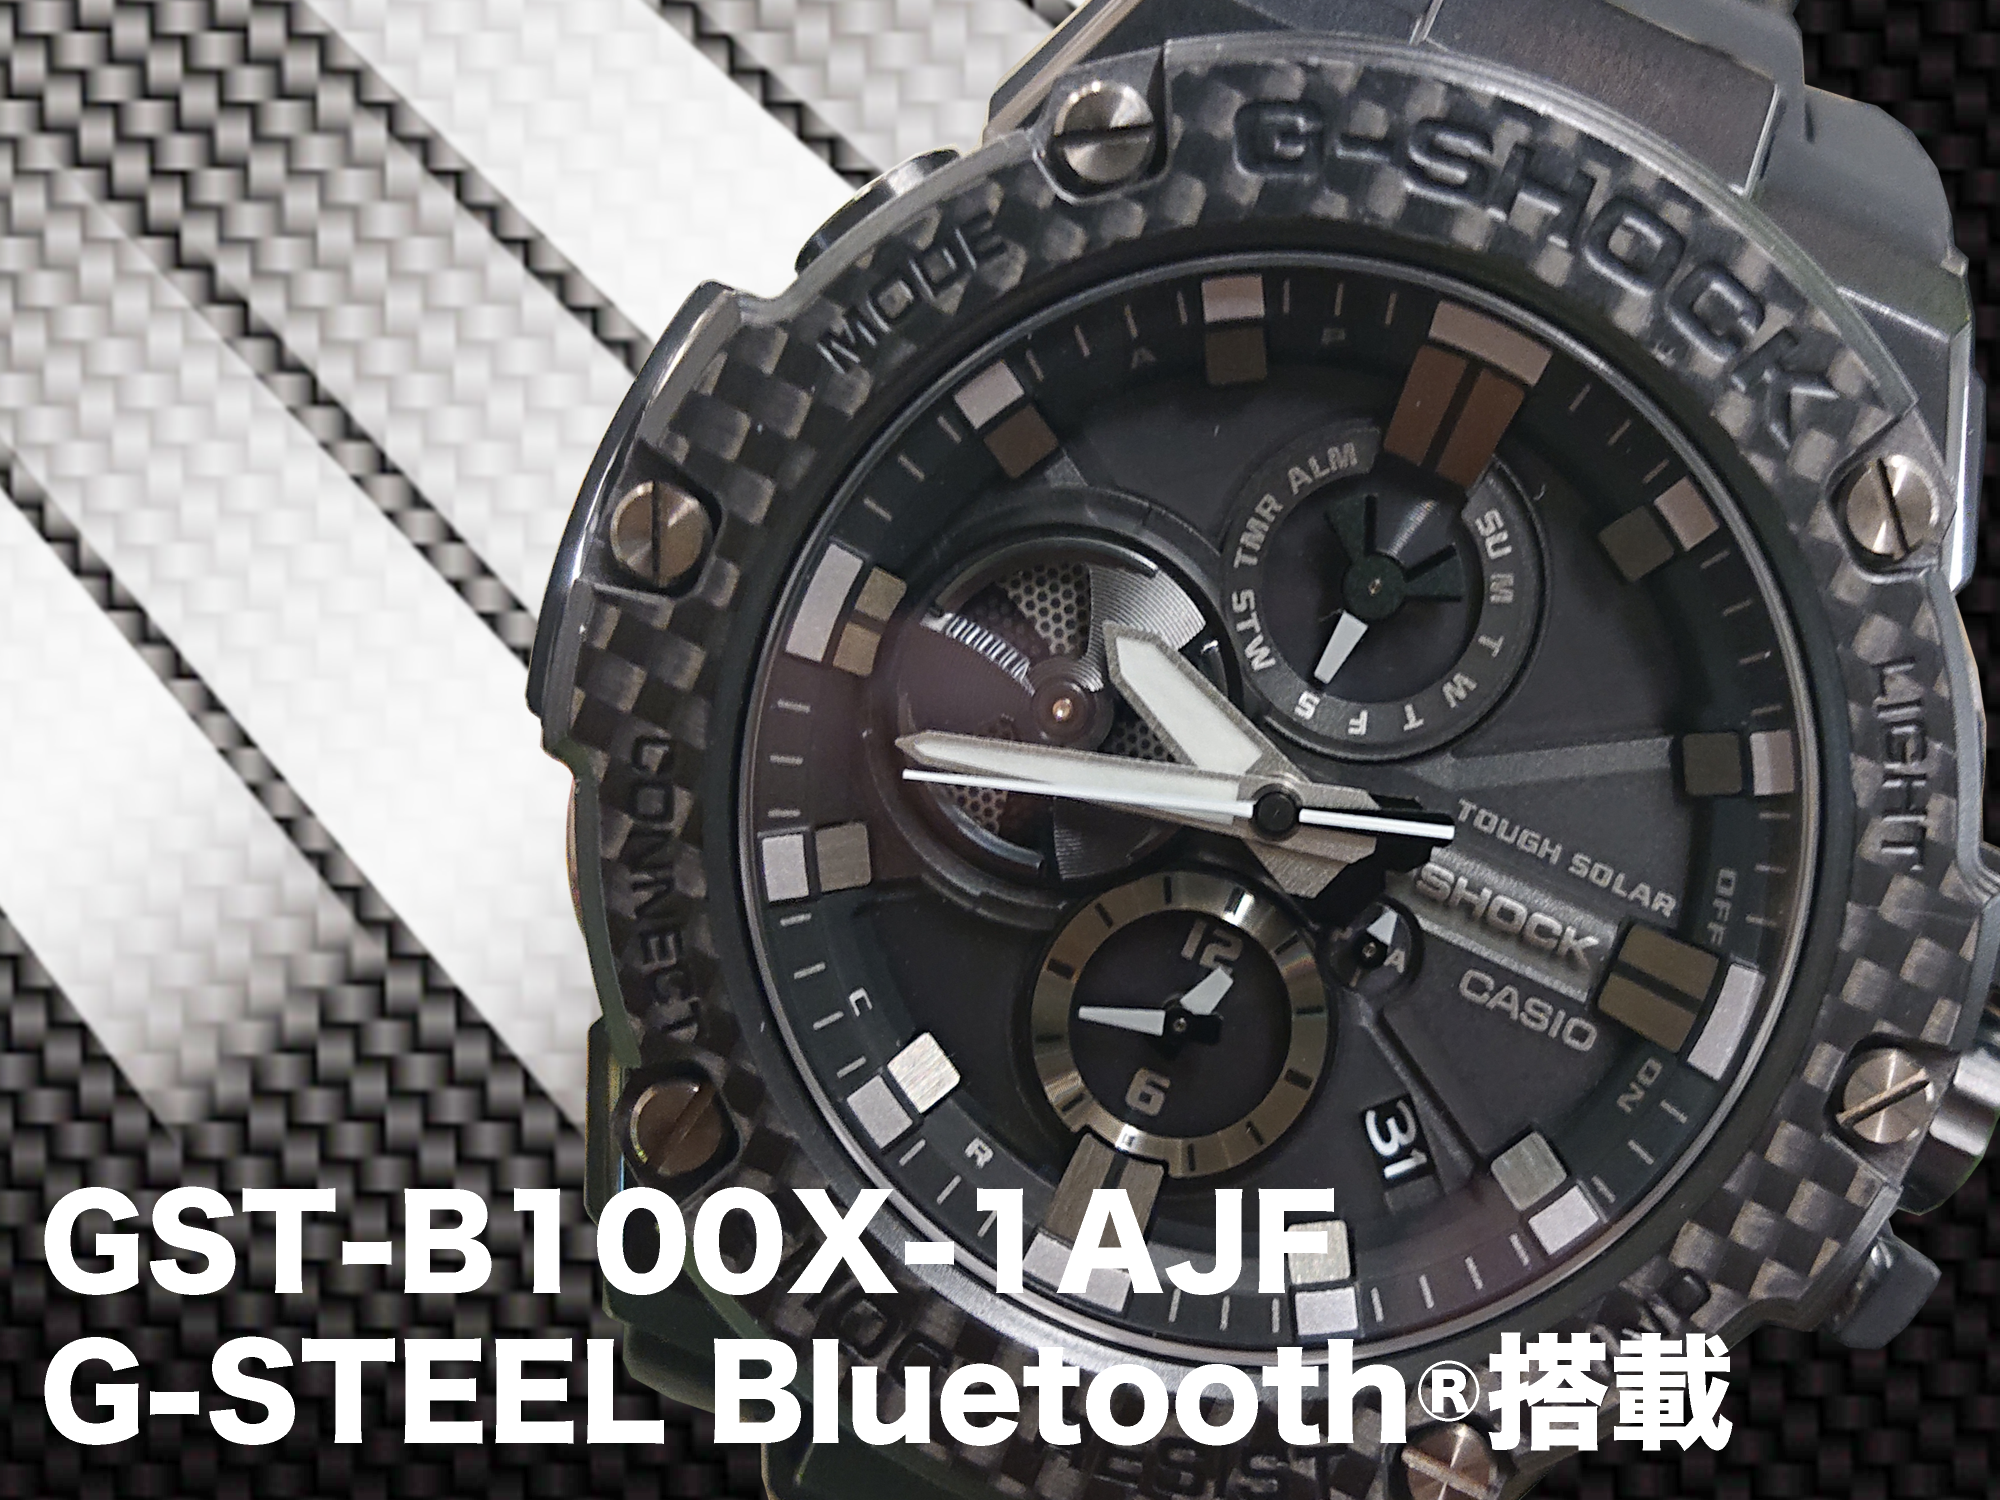 G-SHOCK買取実績】GST-B100X-1AJF G-STEEL 買取価格25,000円 | G-SHOCK